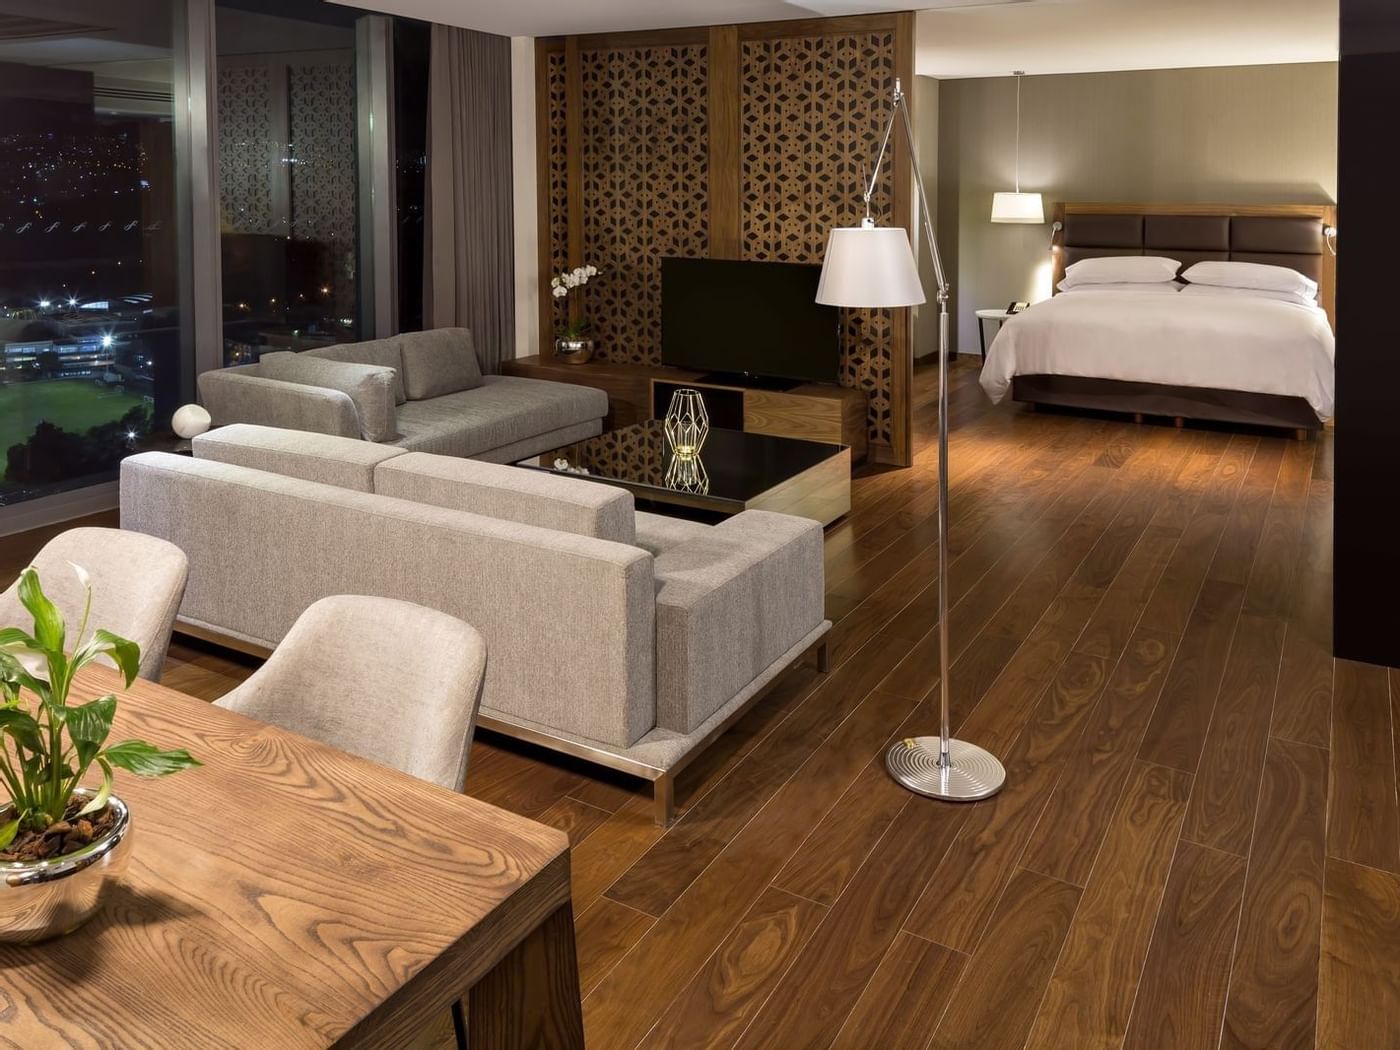 Livingroom in Presidential Suite at FA Hotels & Resorts